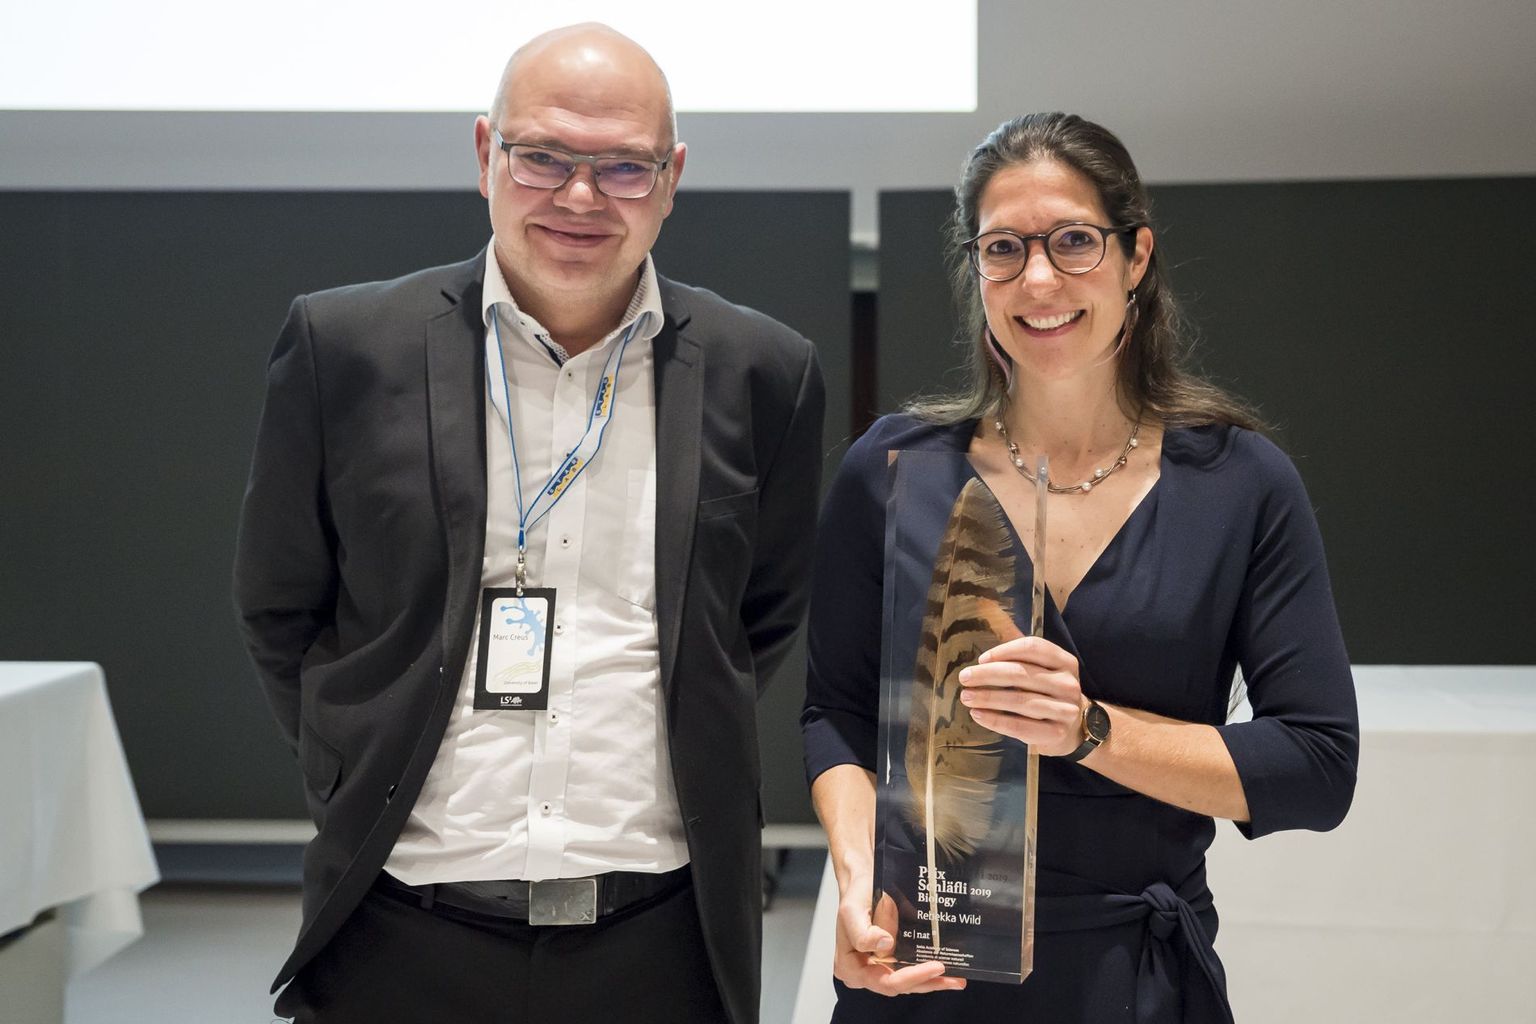 Rebekka Wild - Ceremony Prix Schläfli Biology 2019